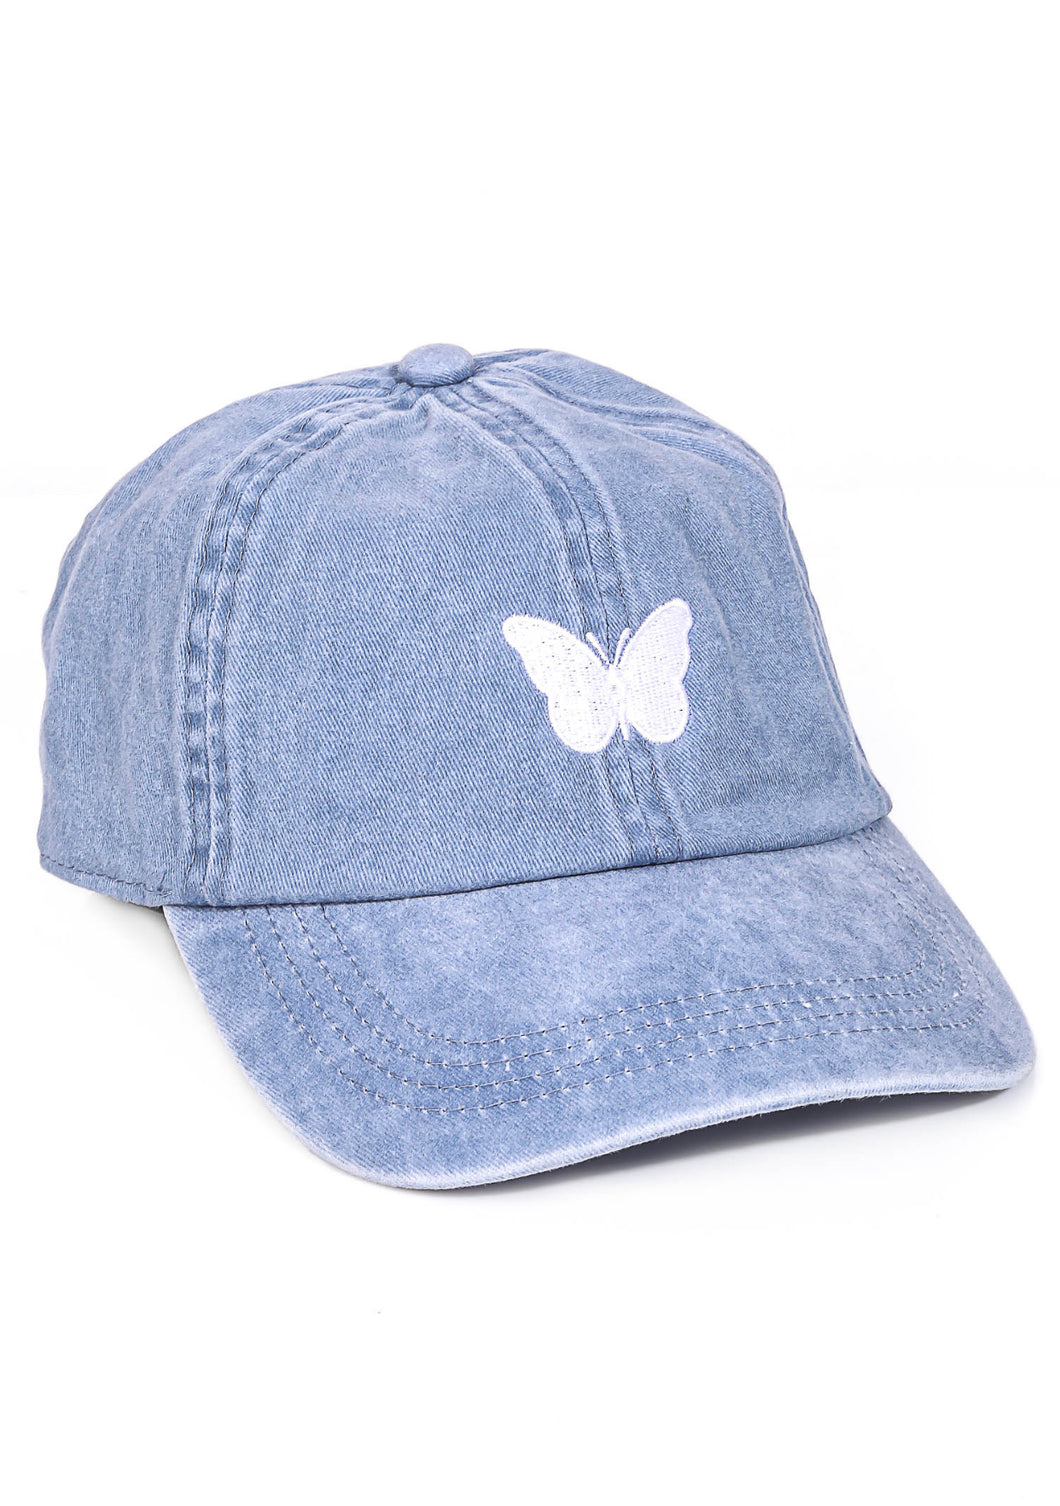 Butterfly Denim Baseball Hat